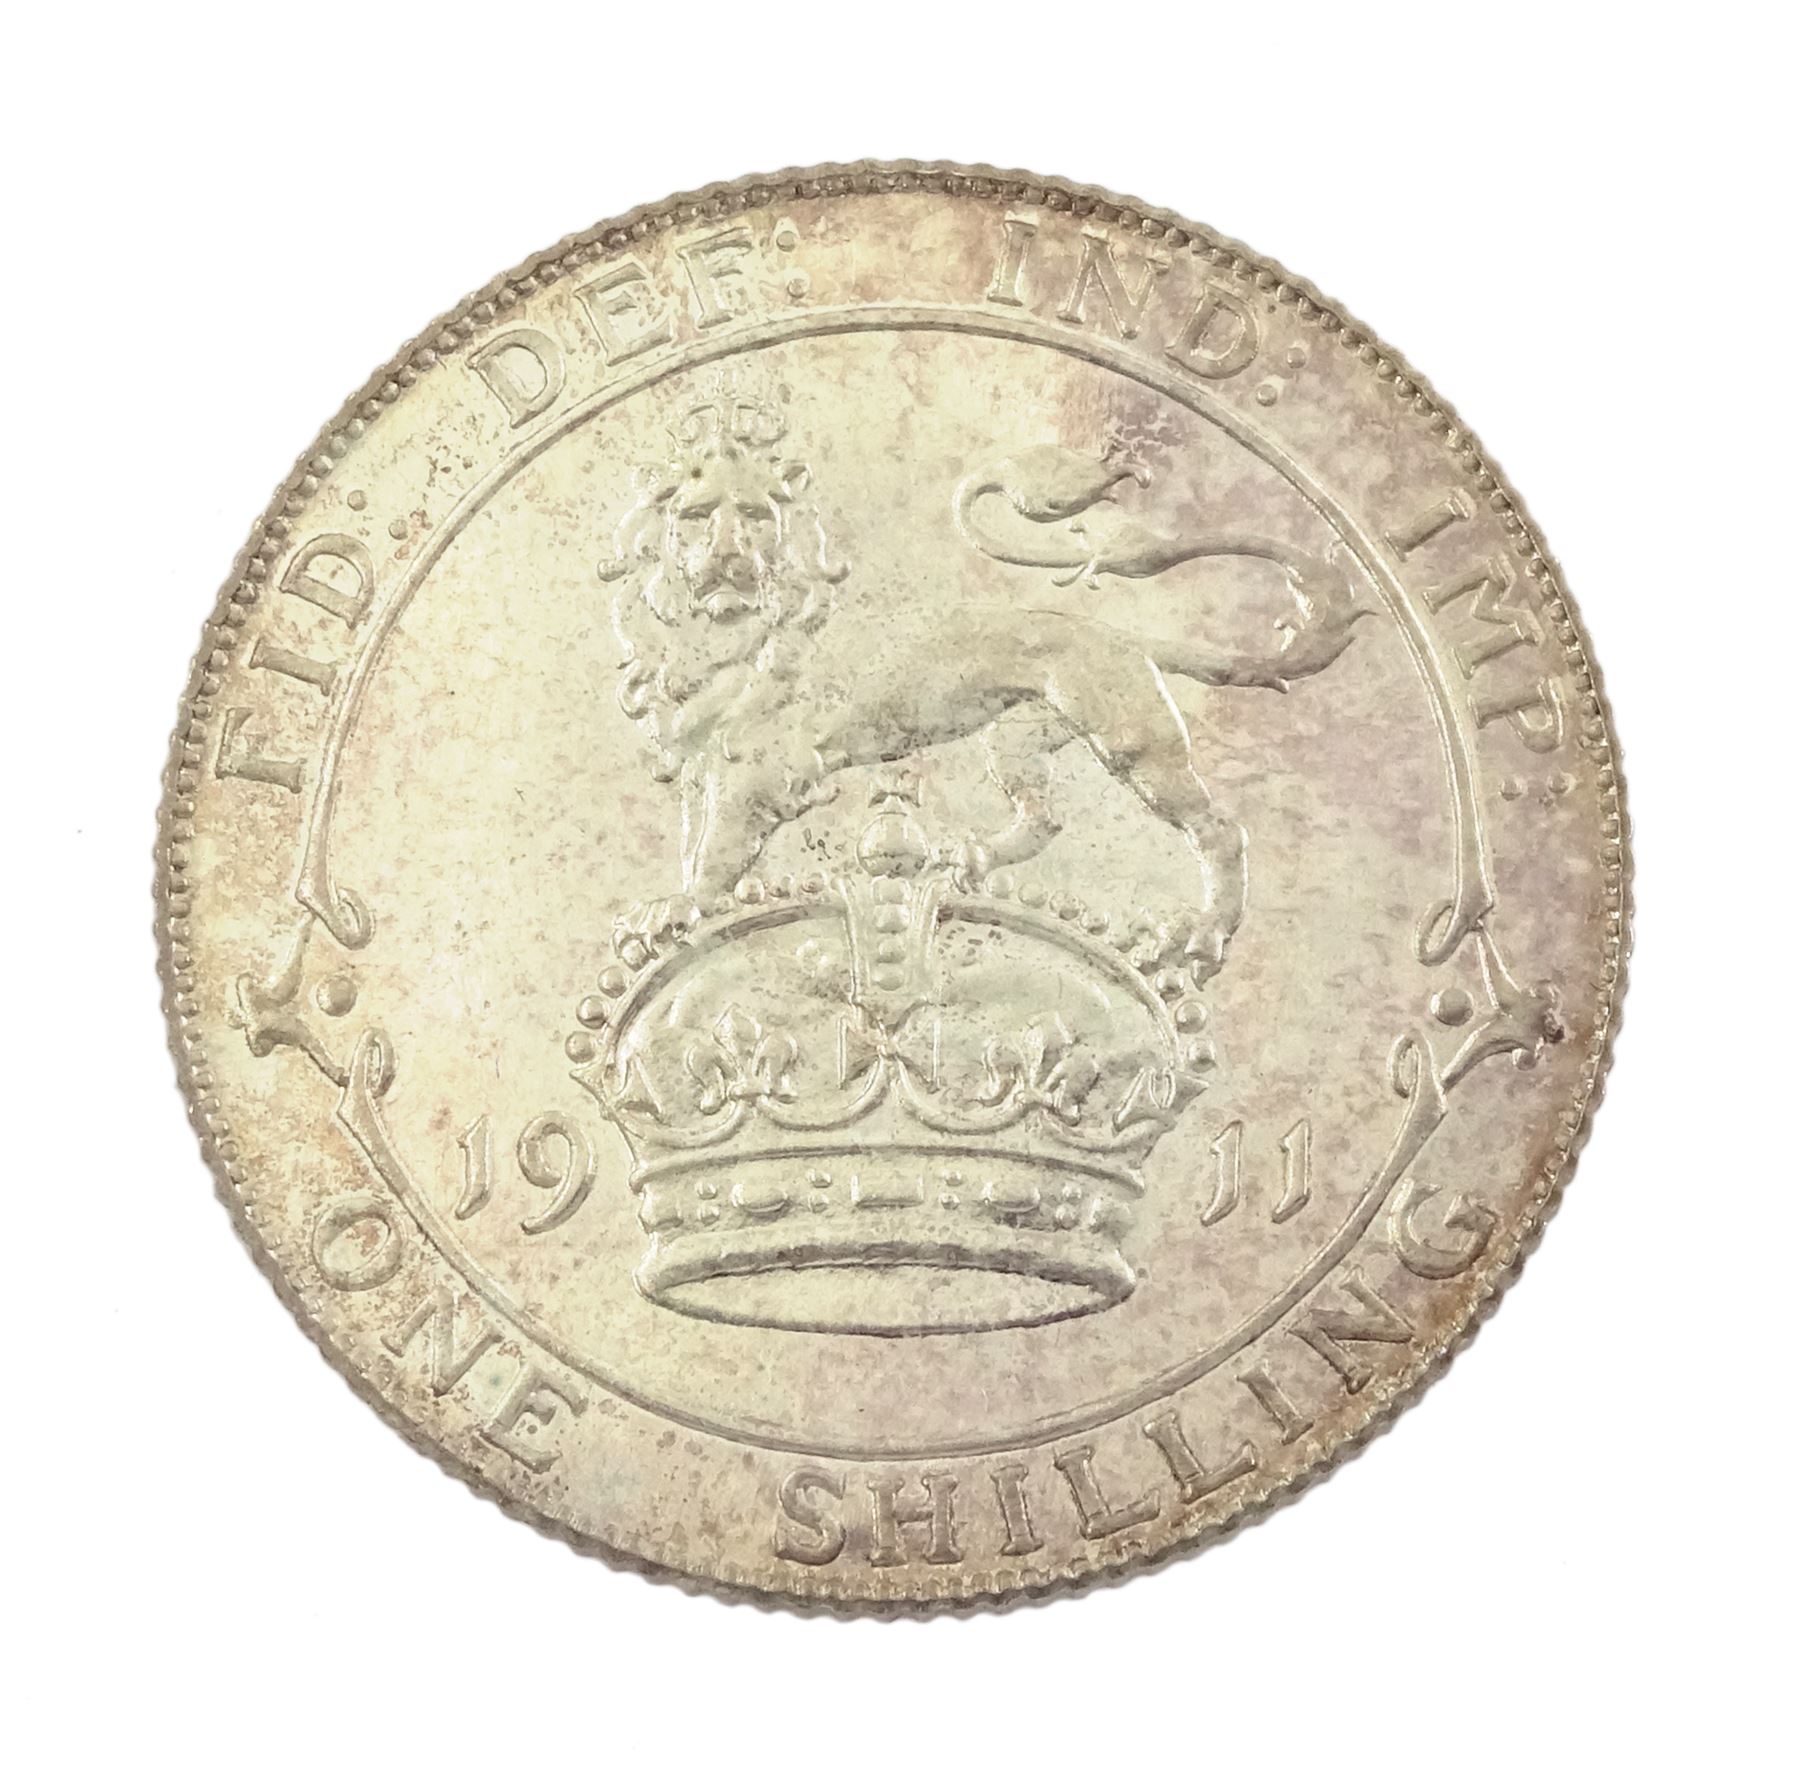 King George V 1911 proof long coin set - Image 15 of 28